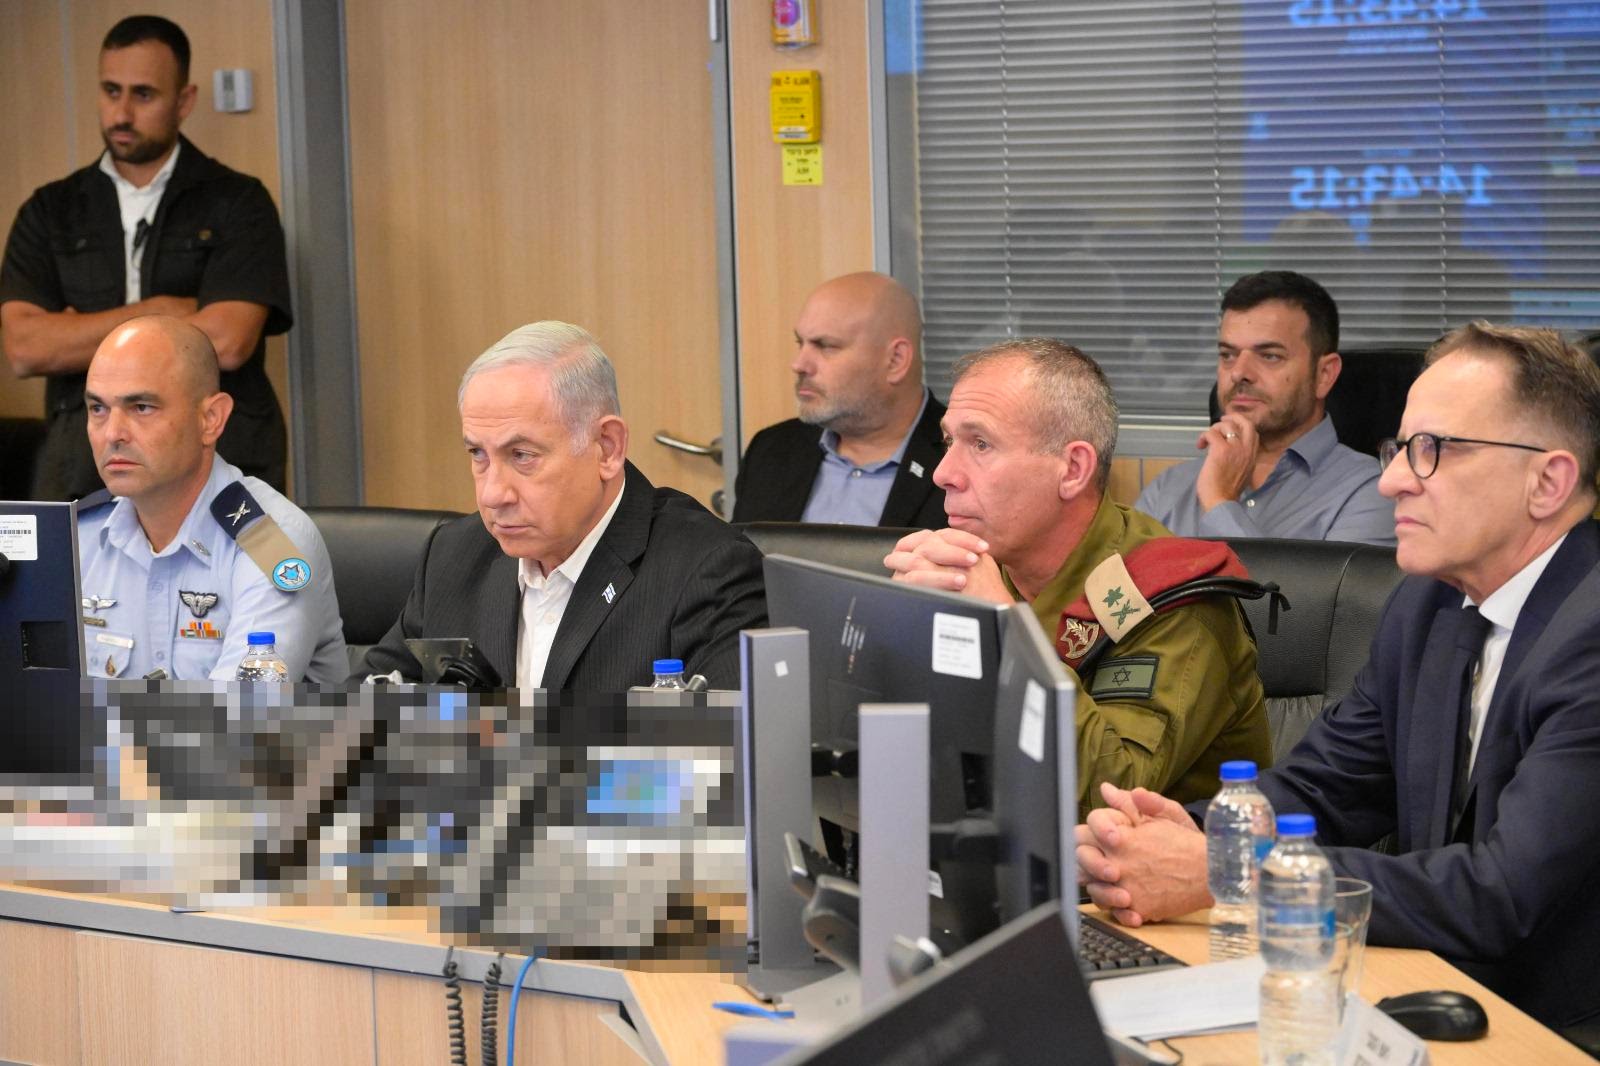 Benjamin Netanyahu, Kirya, Israel, US, India, Gaza, Palestine, Middle East